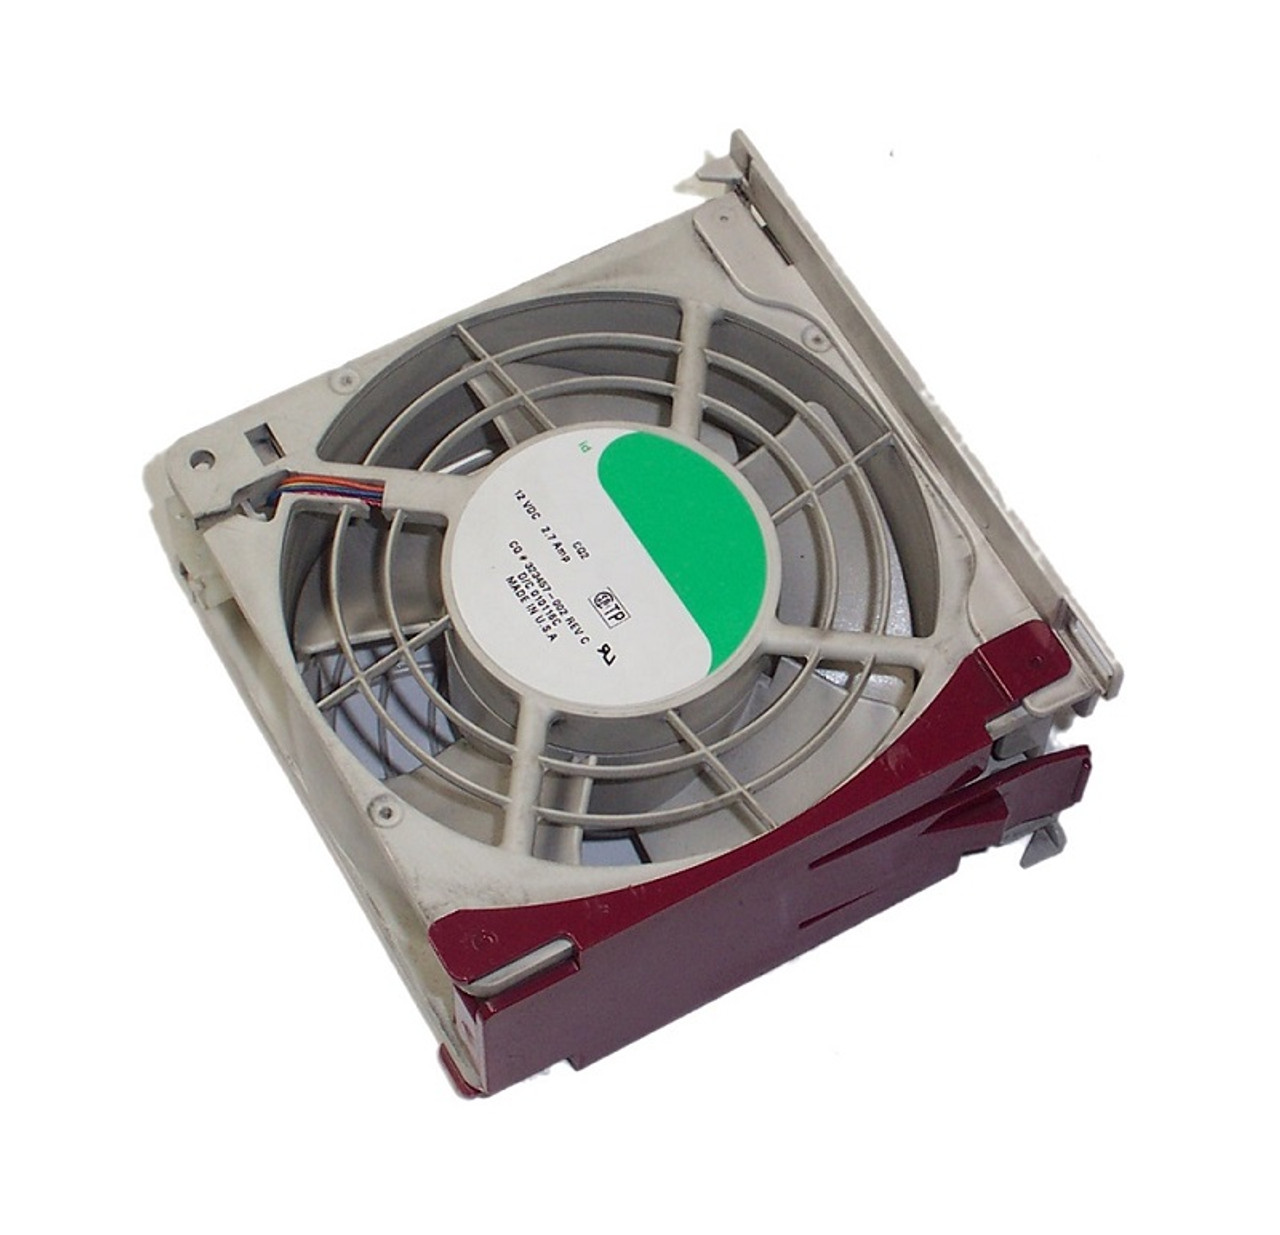 46C9727 - IBM 60mm Hot Swap Fan for System x3750 M4